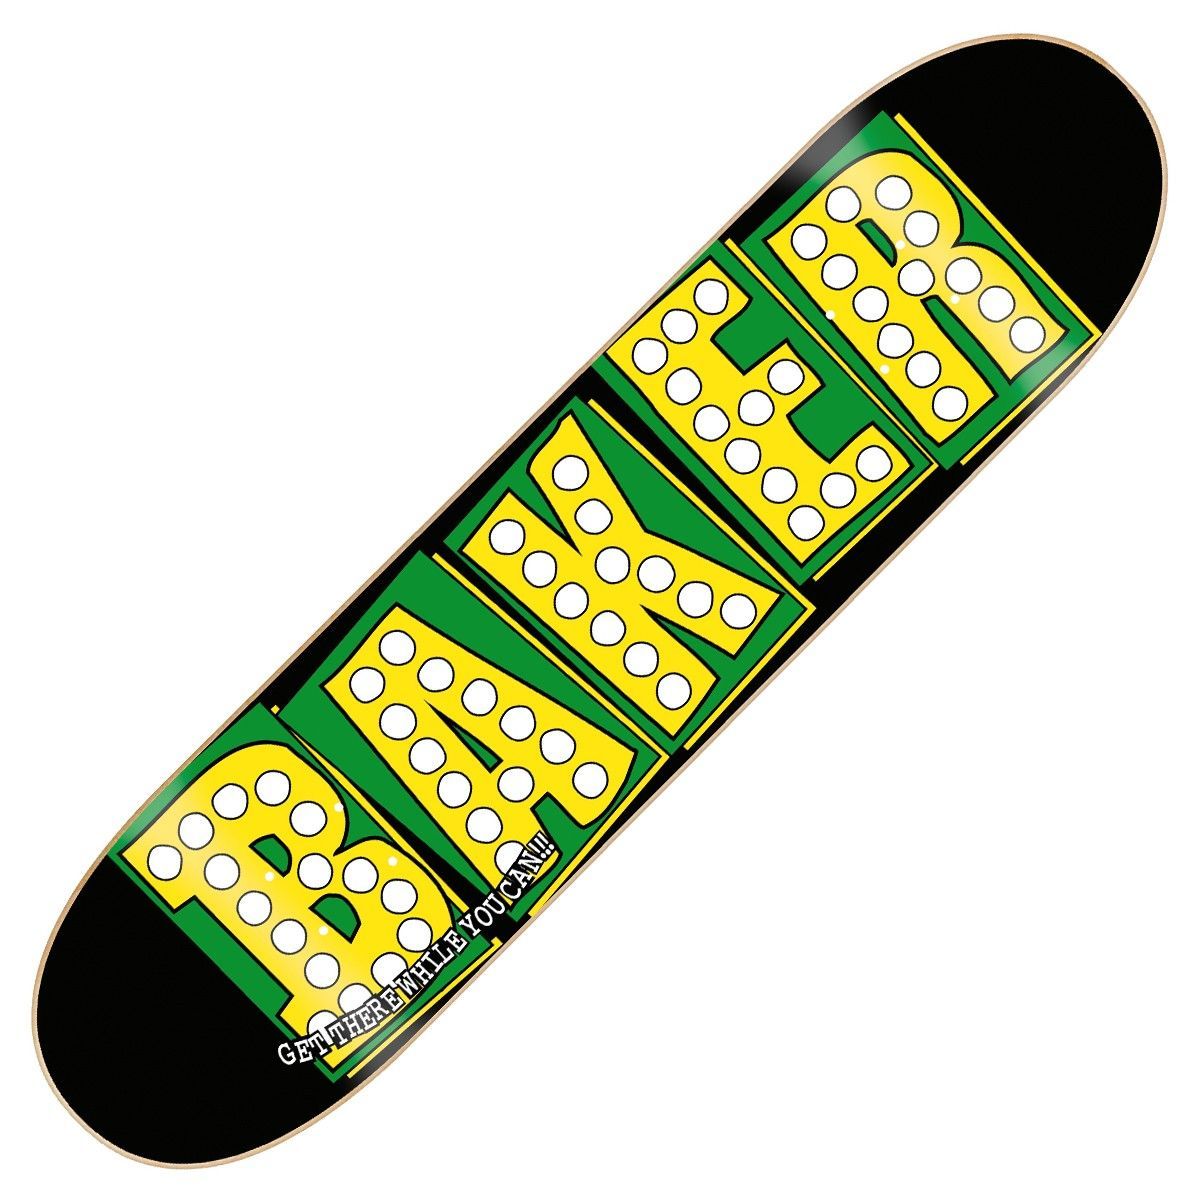 Board BAKER Skateboards Shake Junt black 8.19 inches 70€ grippée #baker #bakerskateboard #bakerskateboards #shakejunt. Skateboards, Shake junt, Baker skateboards